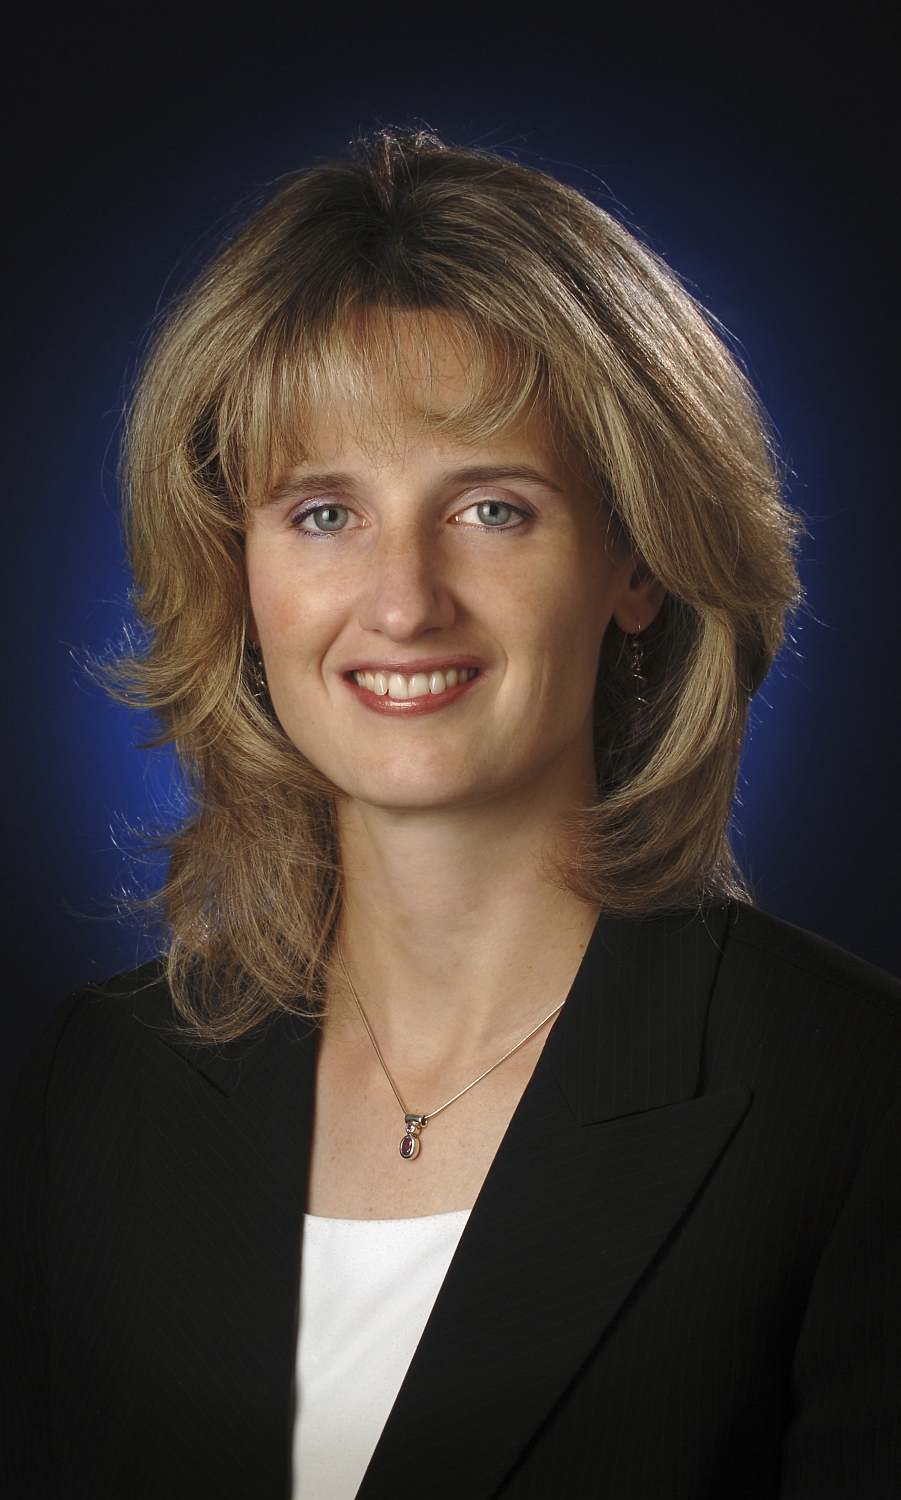 Ms. Lisa J. Porter